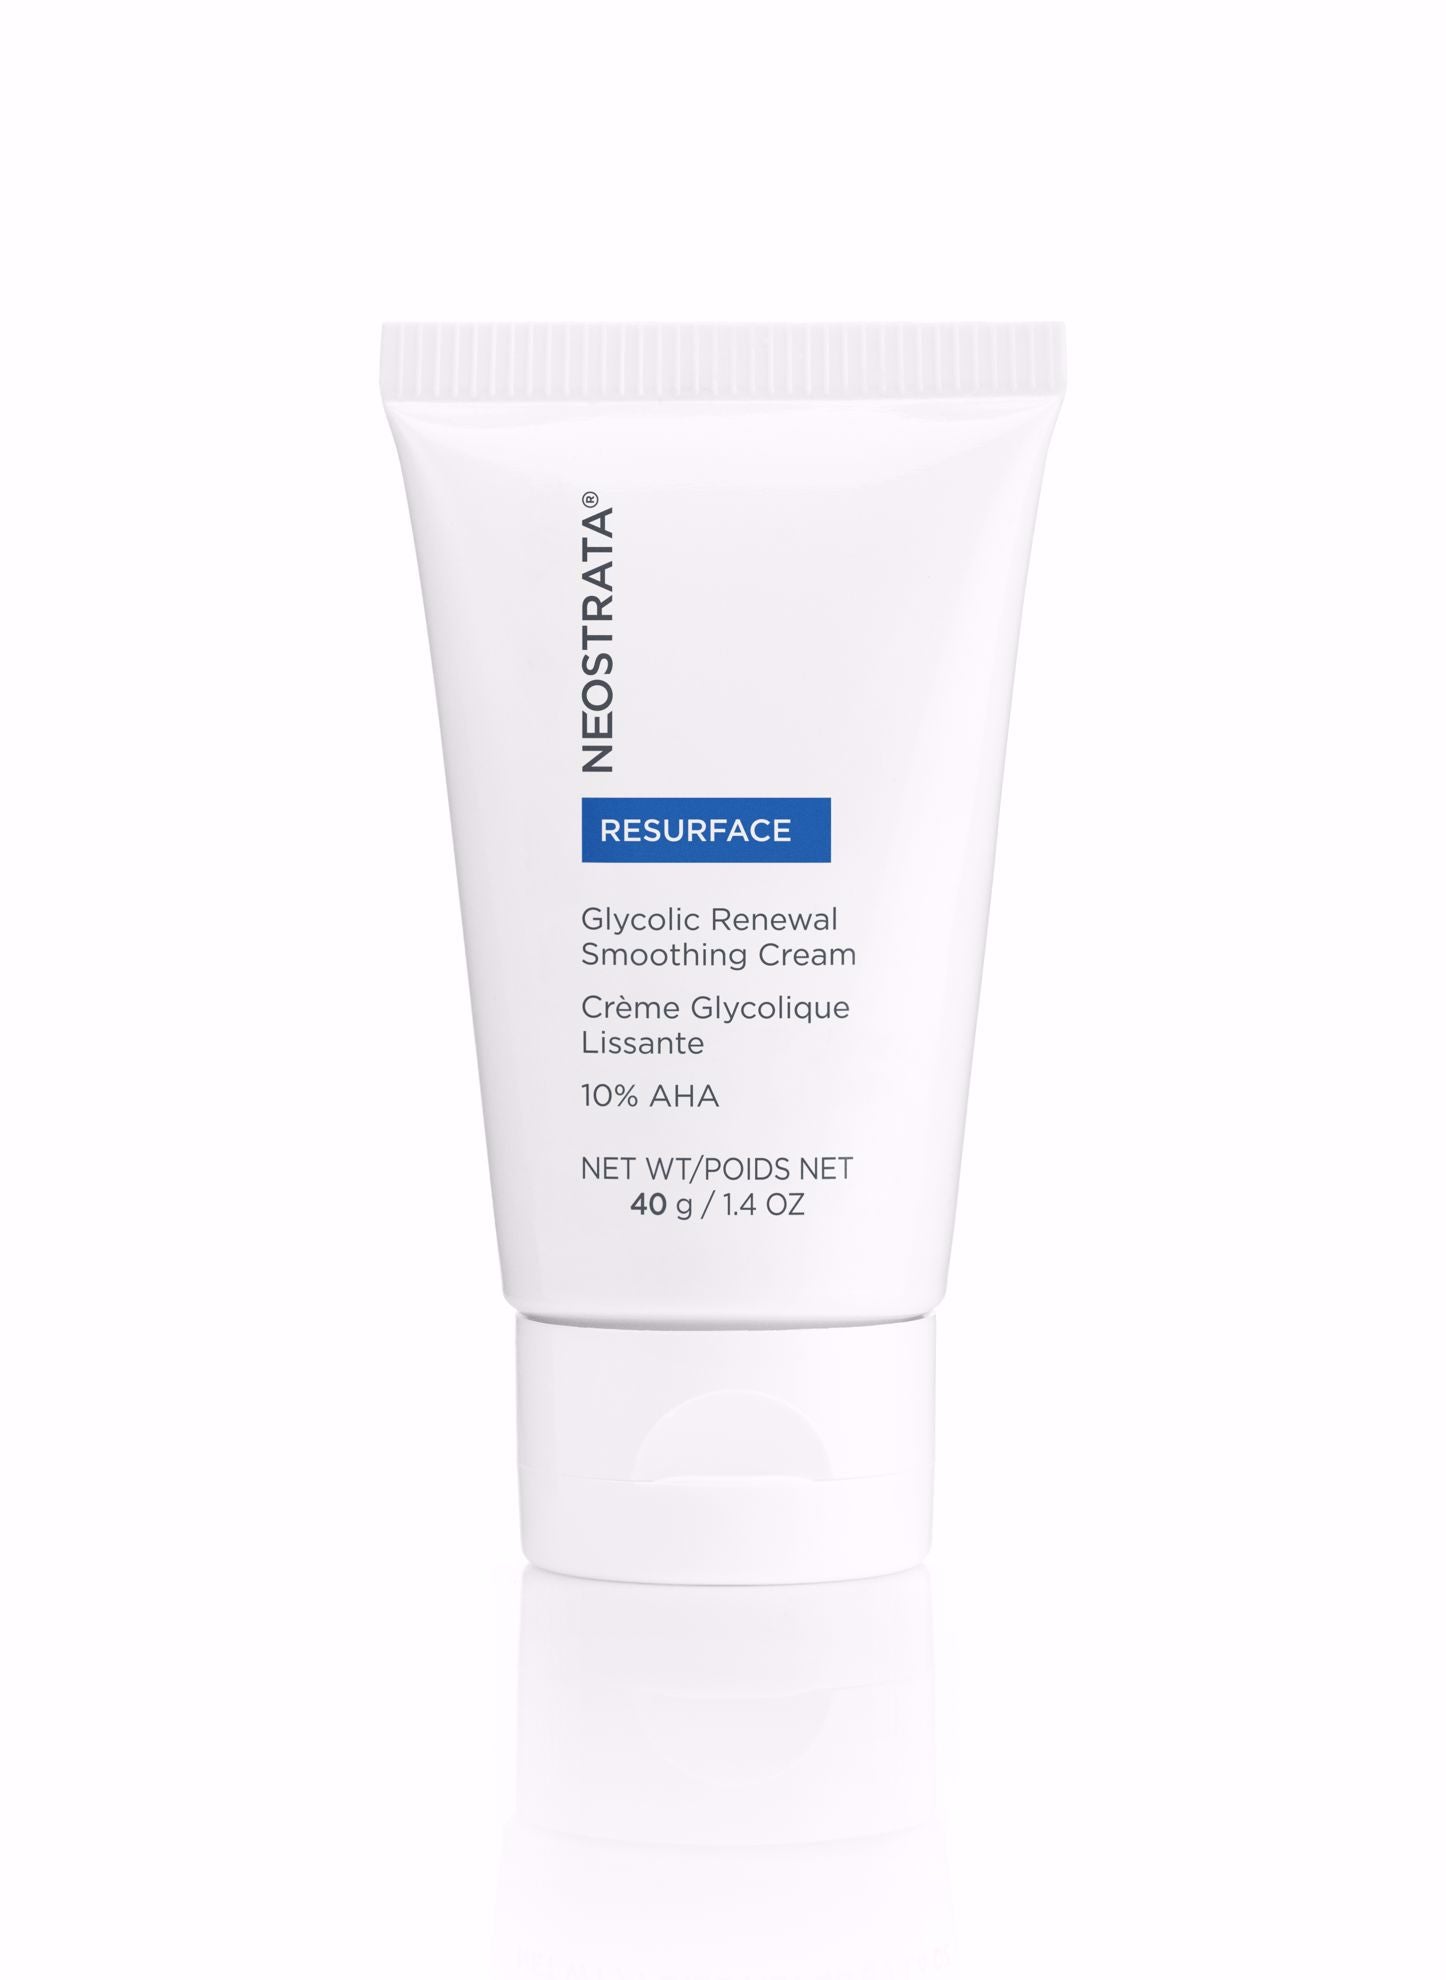 NeoStrata Resurface Glycolic Renewal Smoothing Cream 40g